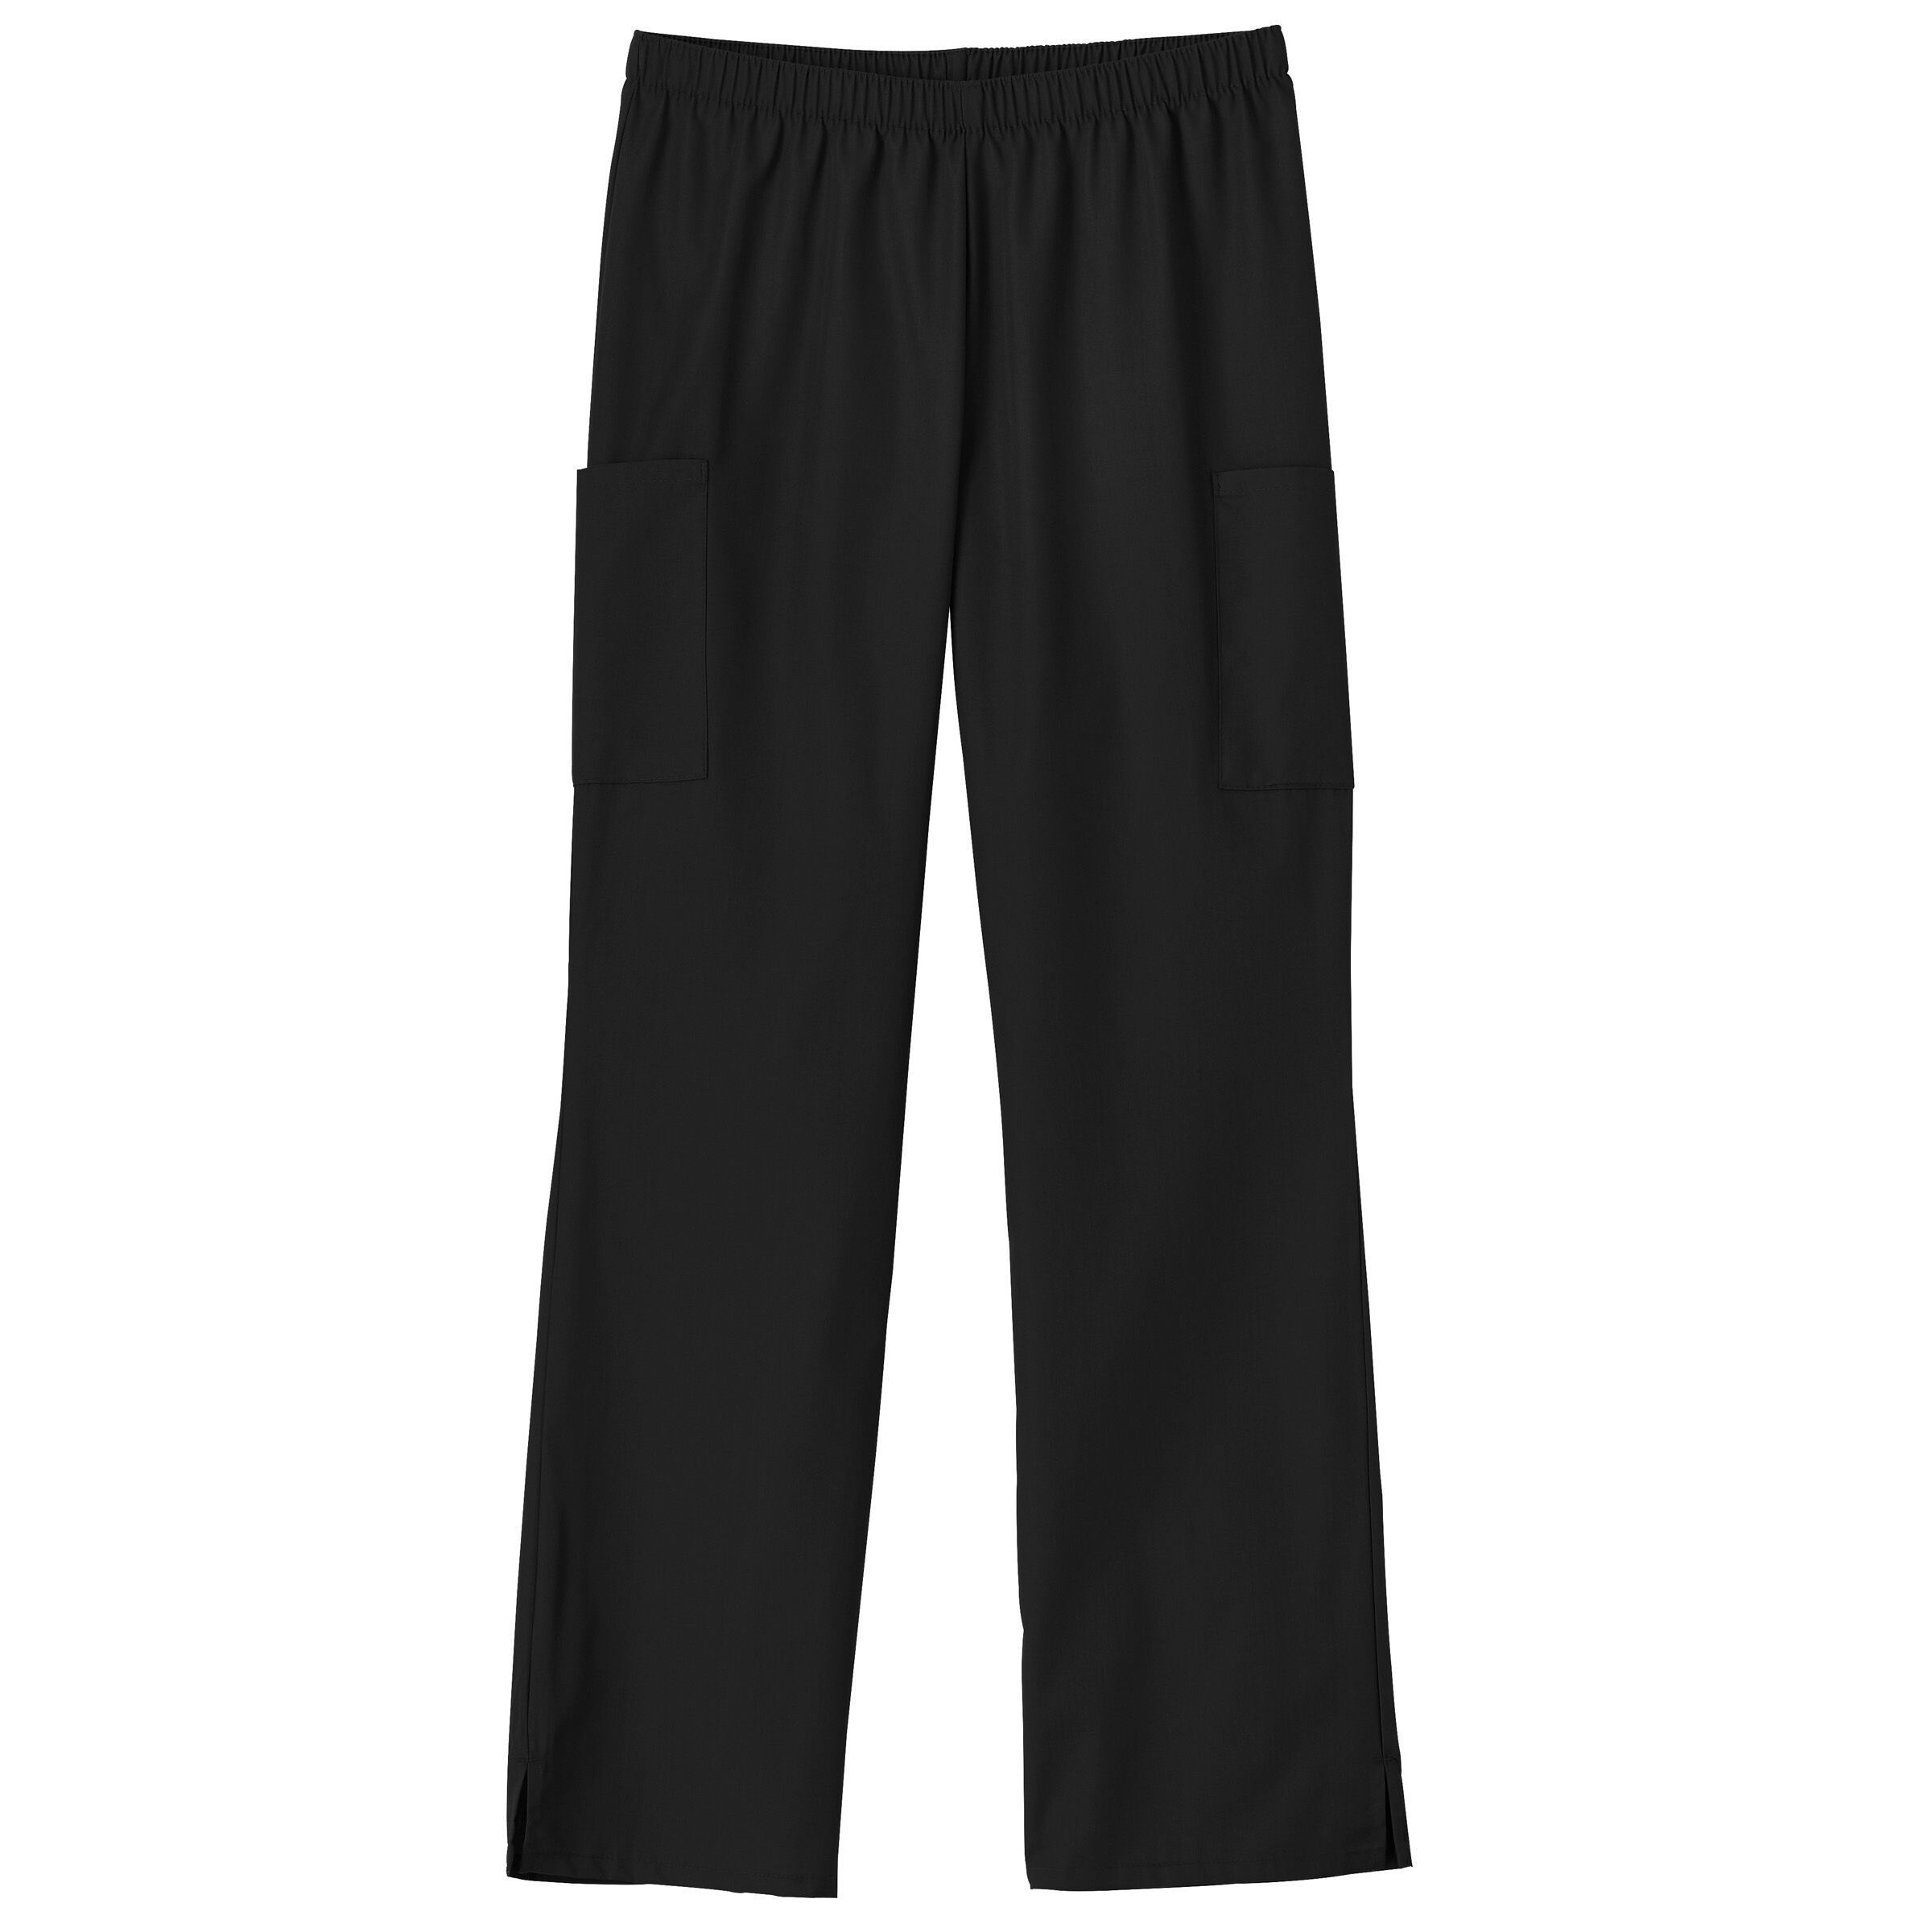 Fundamentals Ladies Cargo Pant Tall Full Elastic, Black, large image number 1